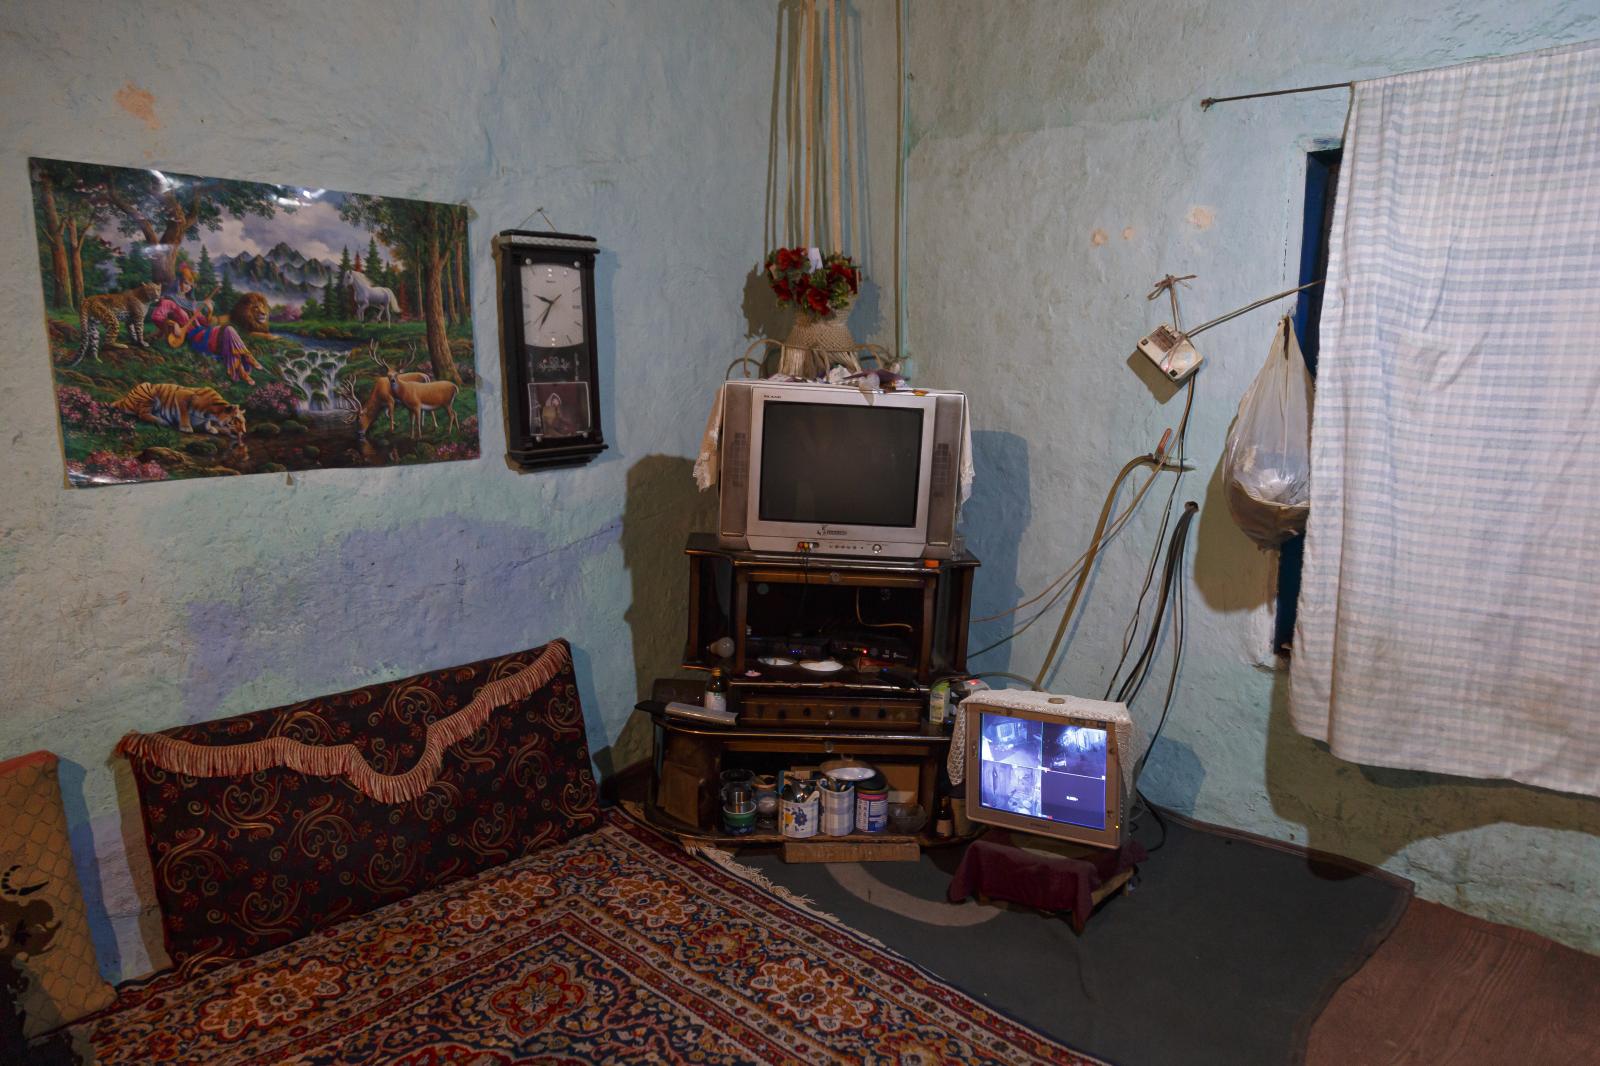 The Roohangiz Grandmother -   The Rouhangiz grandmother 's house room. Being away...